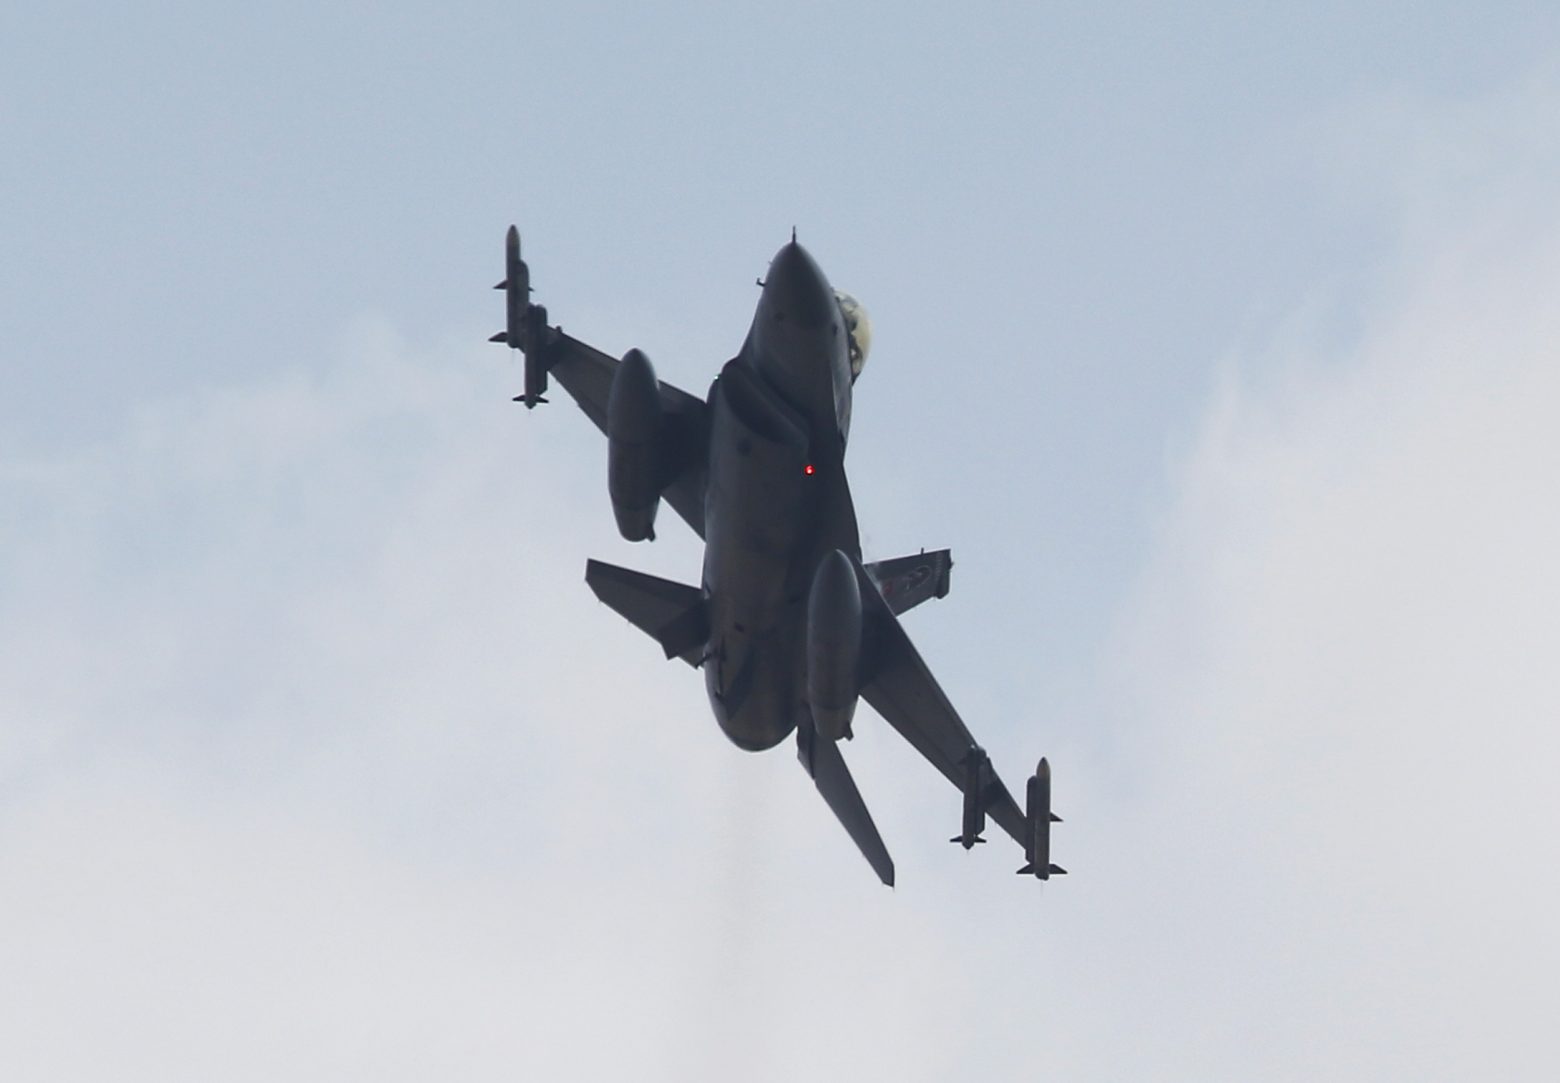 RND: Το μπλόκο στα τουρκικά F-16 απειλεί την ένταξη Σουηδίας και Φινλανδίας στο ΝΑΤΟ;